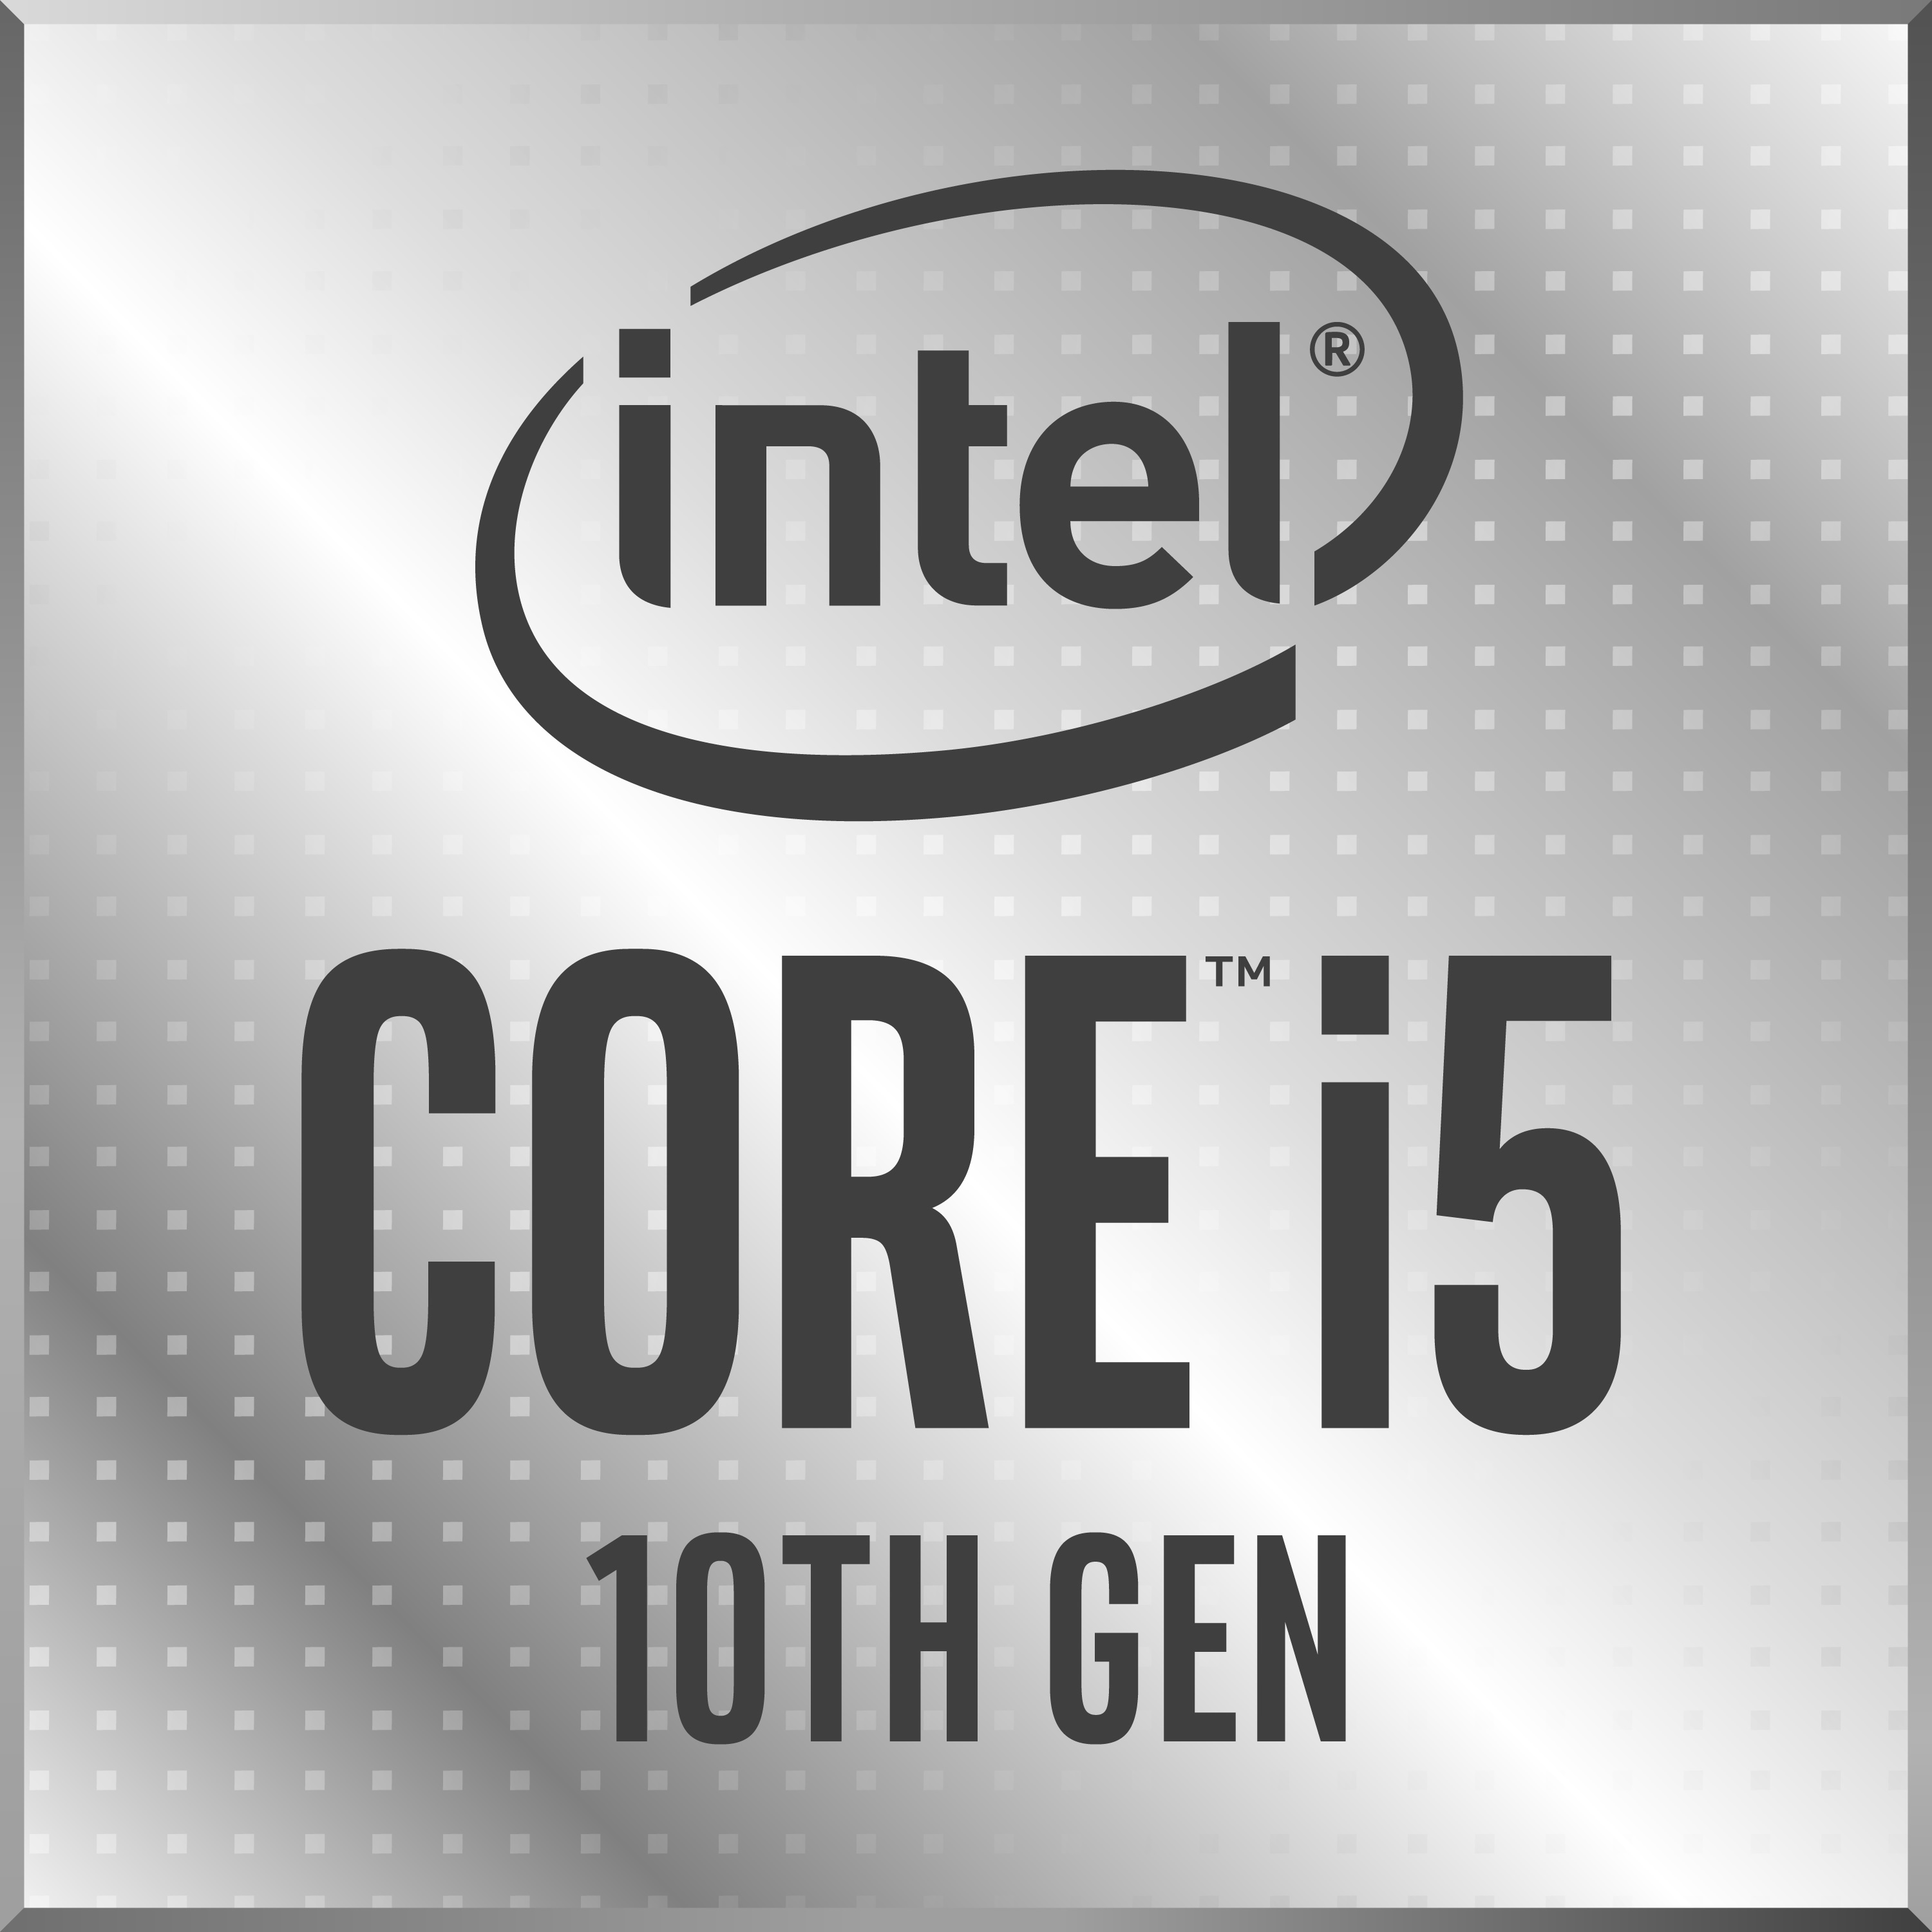 Intel Core i5-10310U Processor - Benchmarks and Specs -   Tech